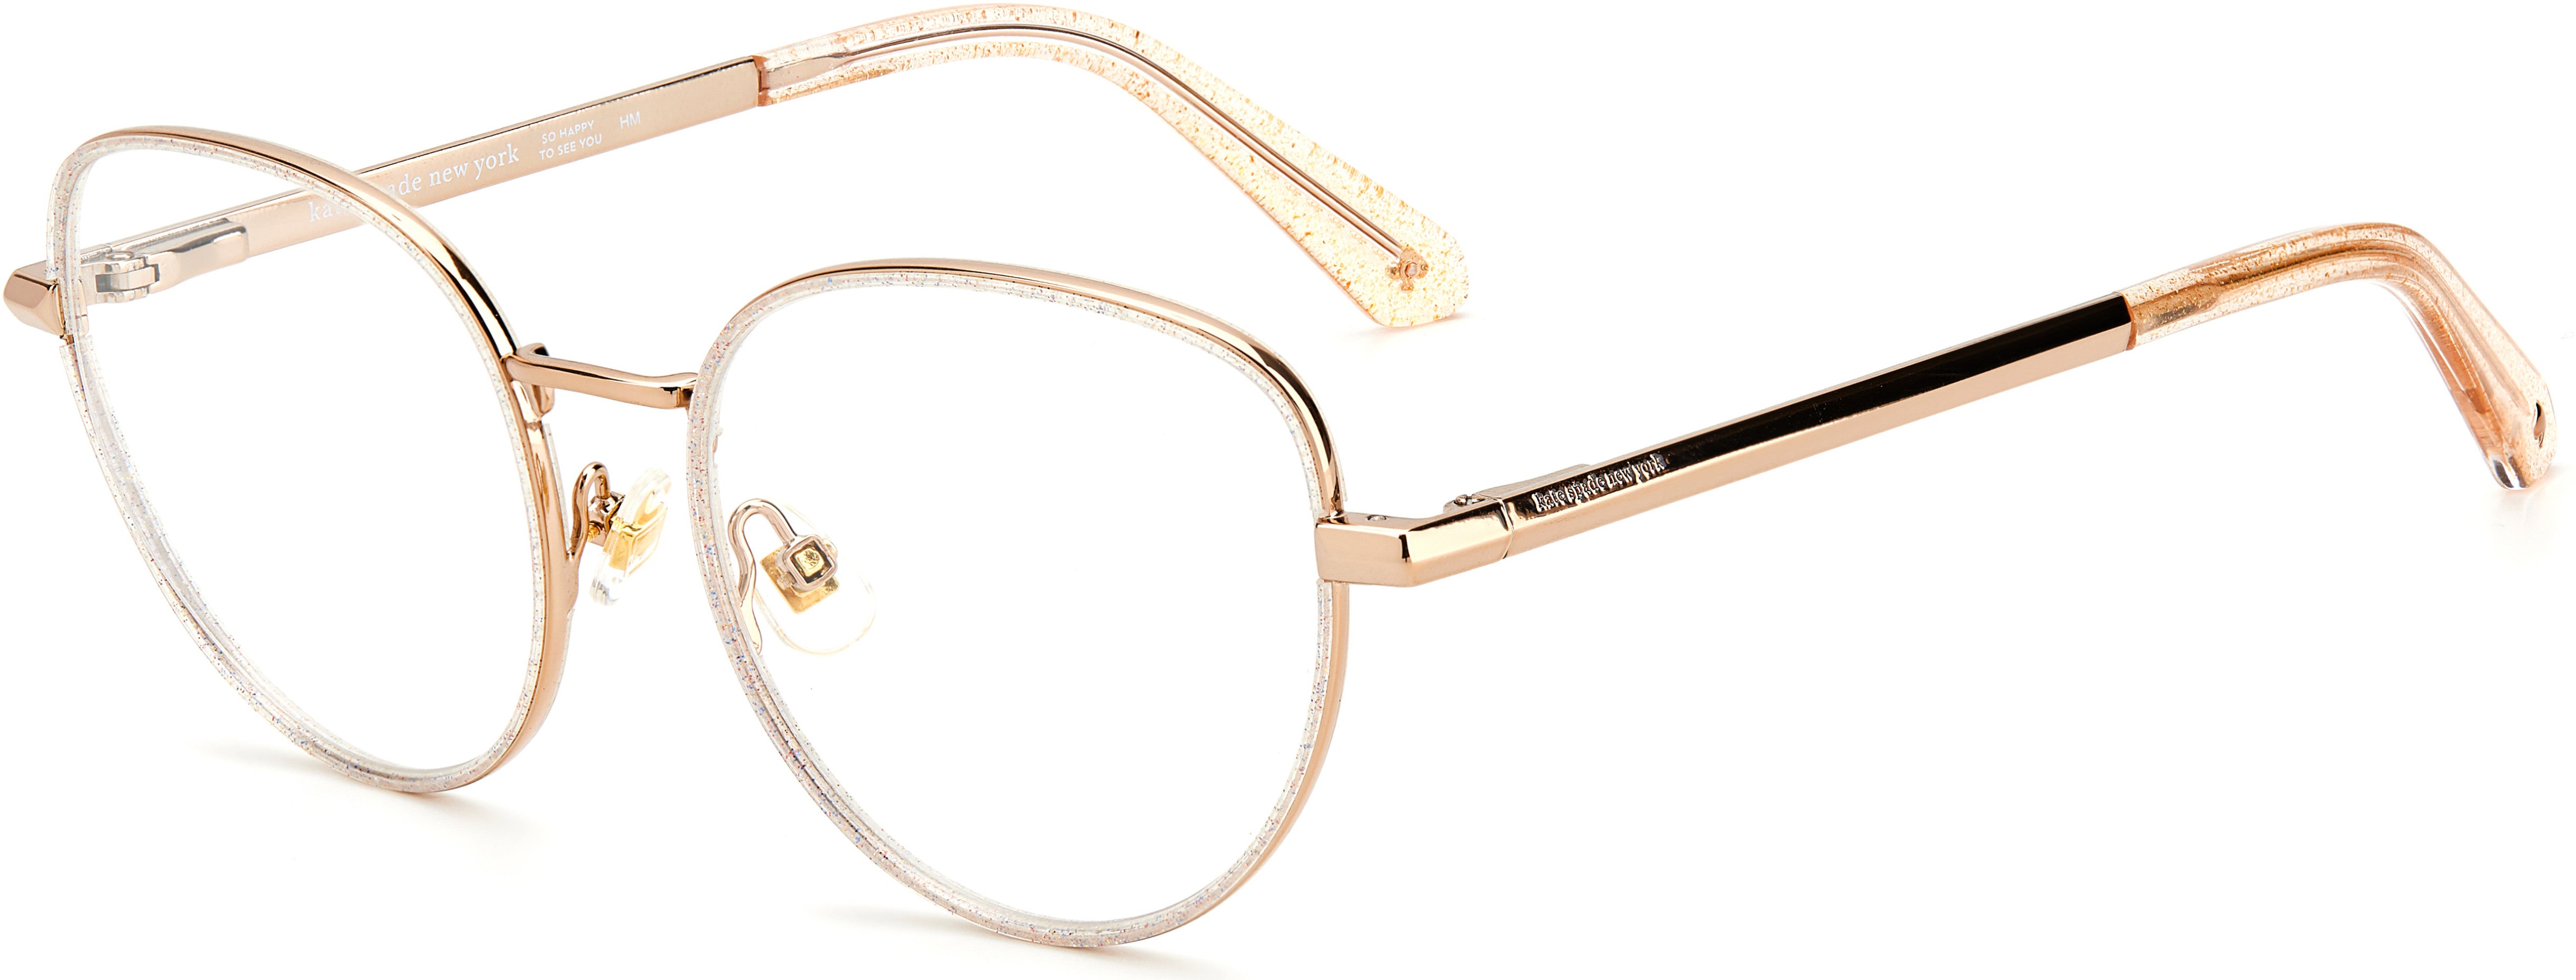 Kate Spade Ayla Oval Modified Eyeglasses 0AU2-0AU2  Red Gold (00 Demo Lens)